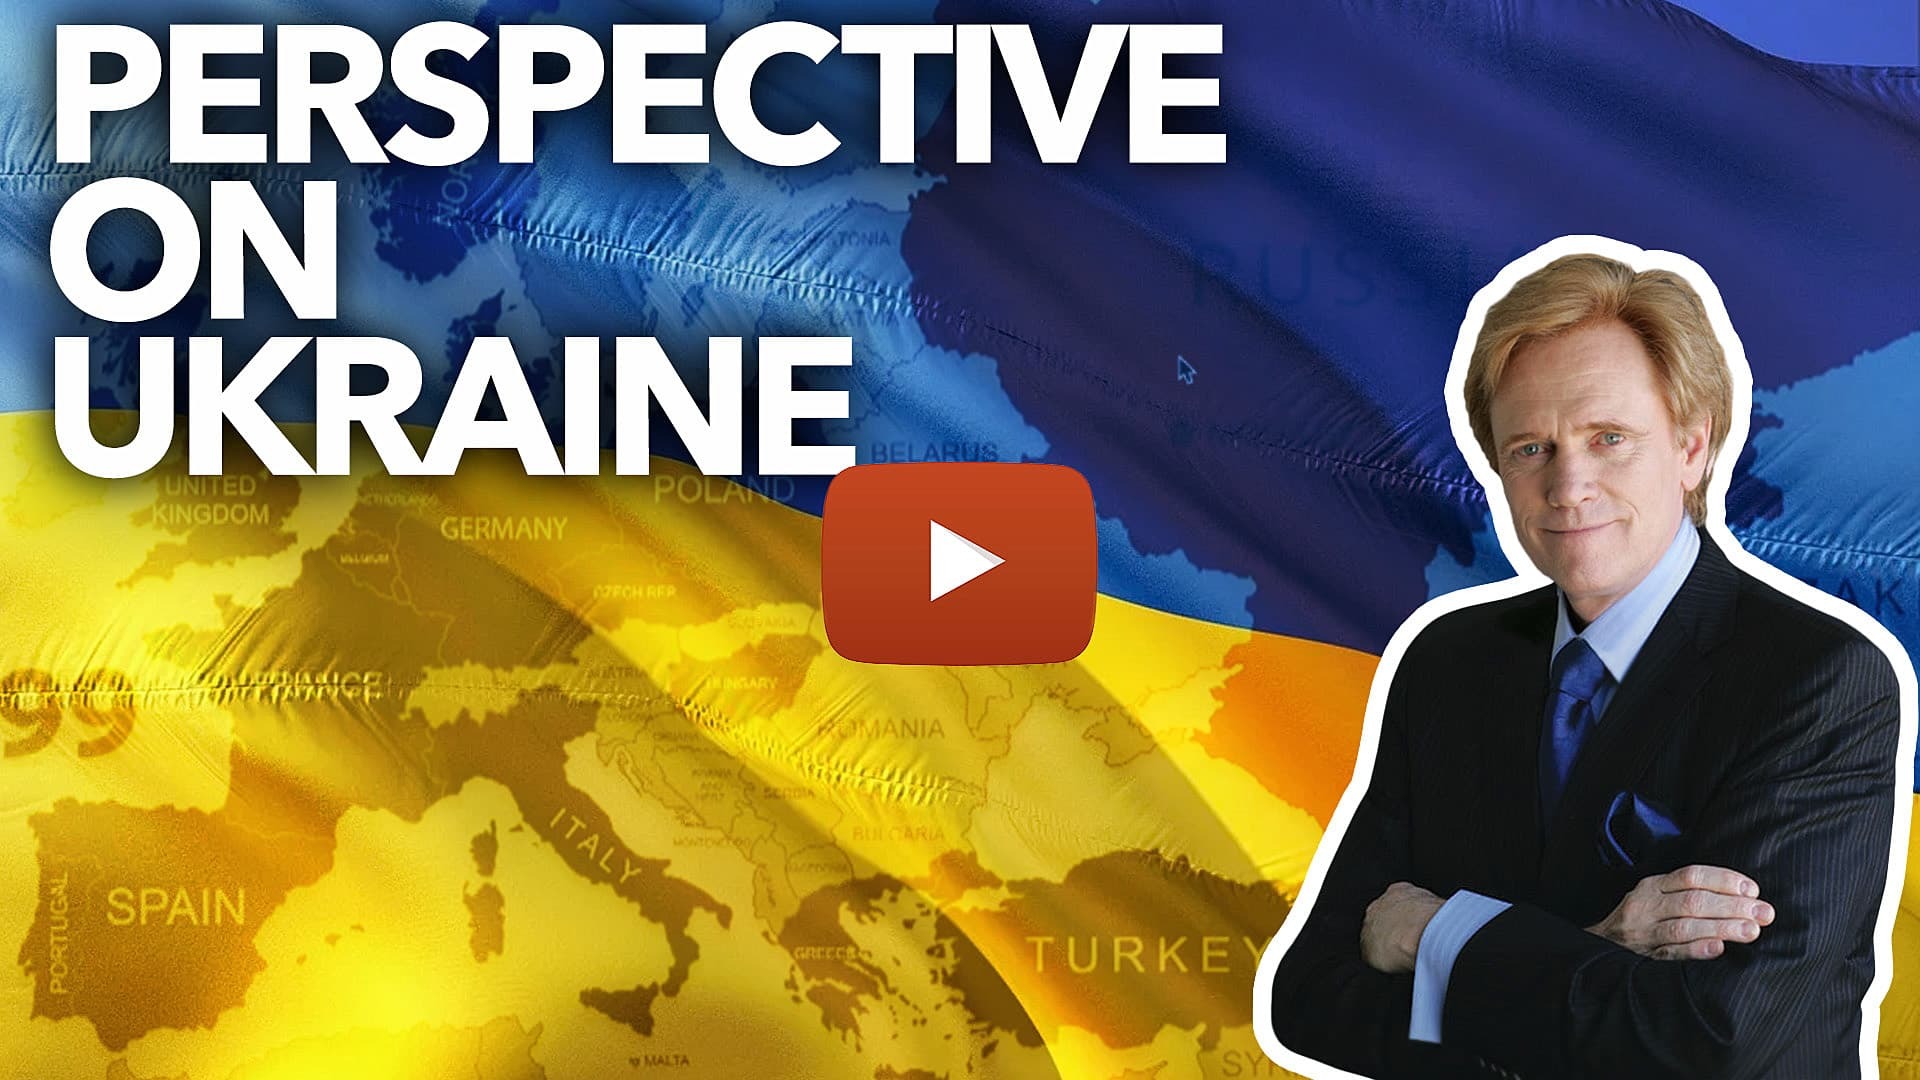 Perspective On Ukraine